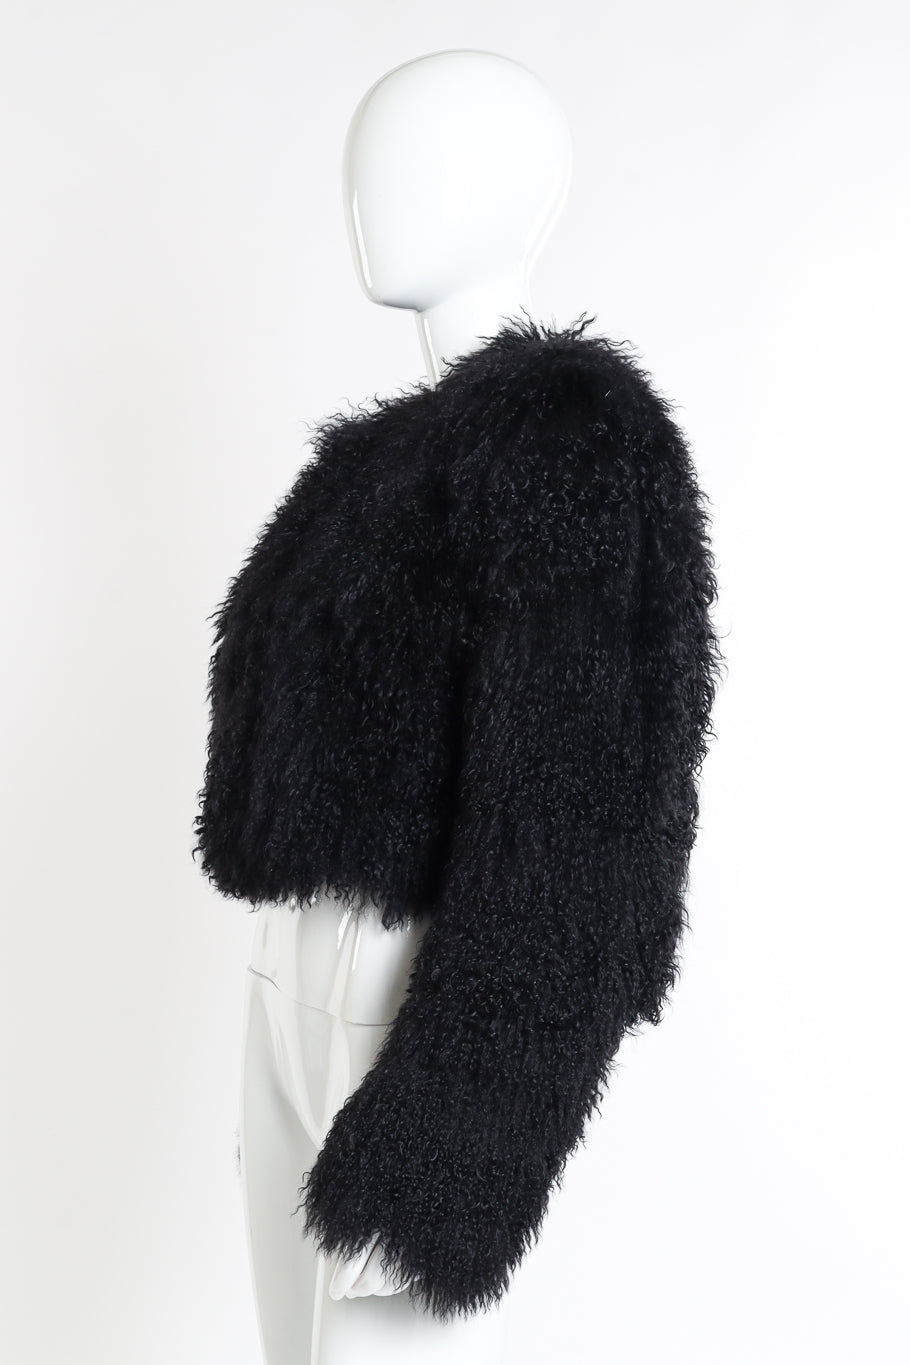 Yves Saint Laurent Mongolian Fur Jacket side on mannequin @recessla